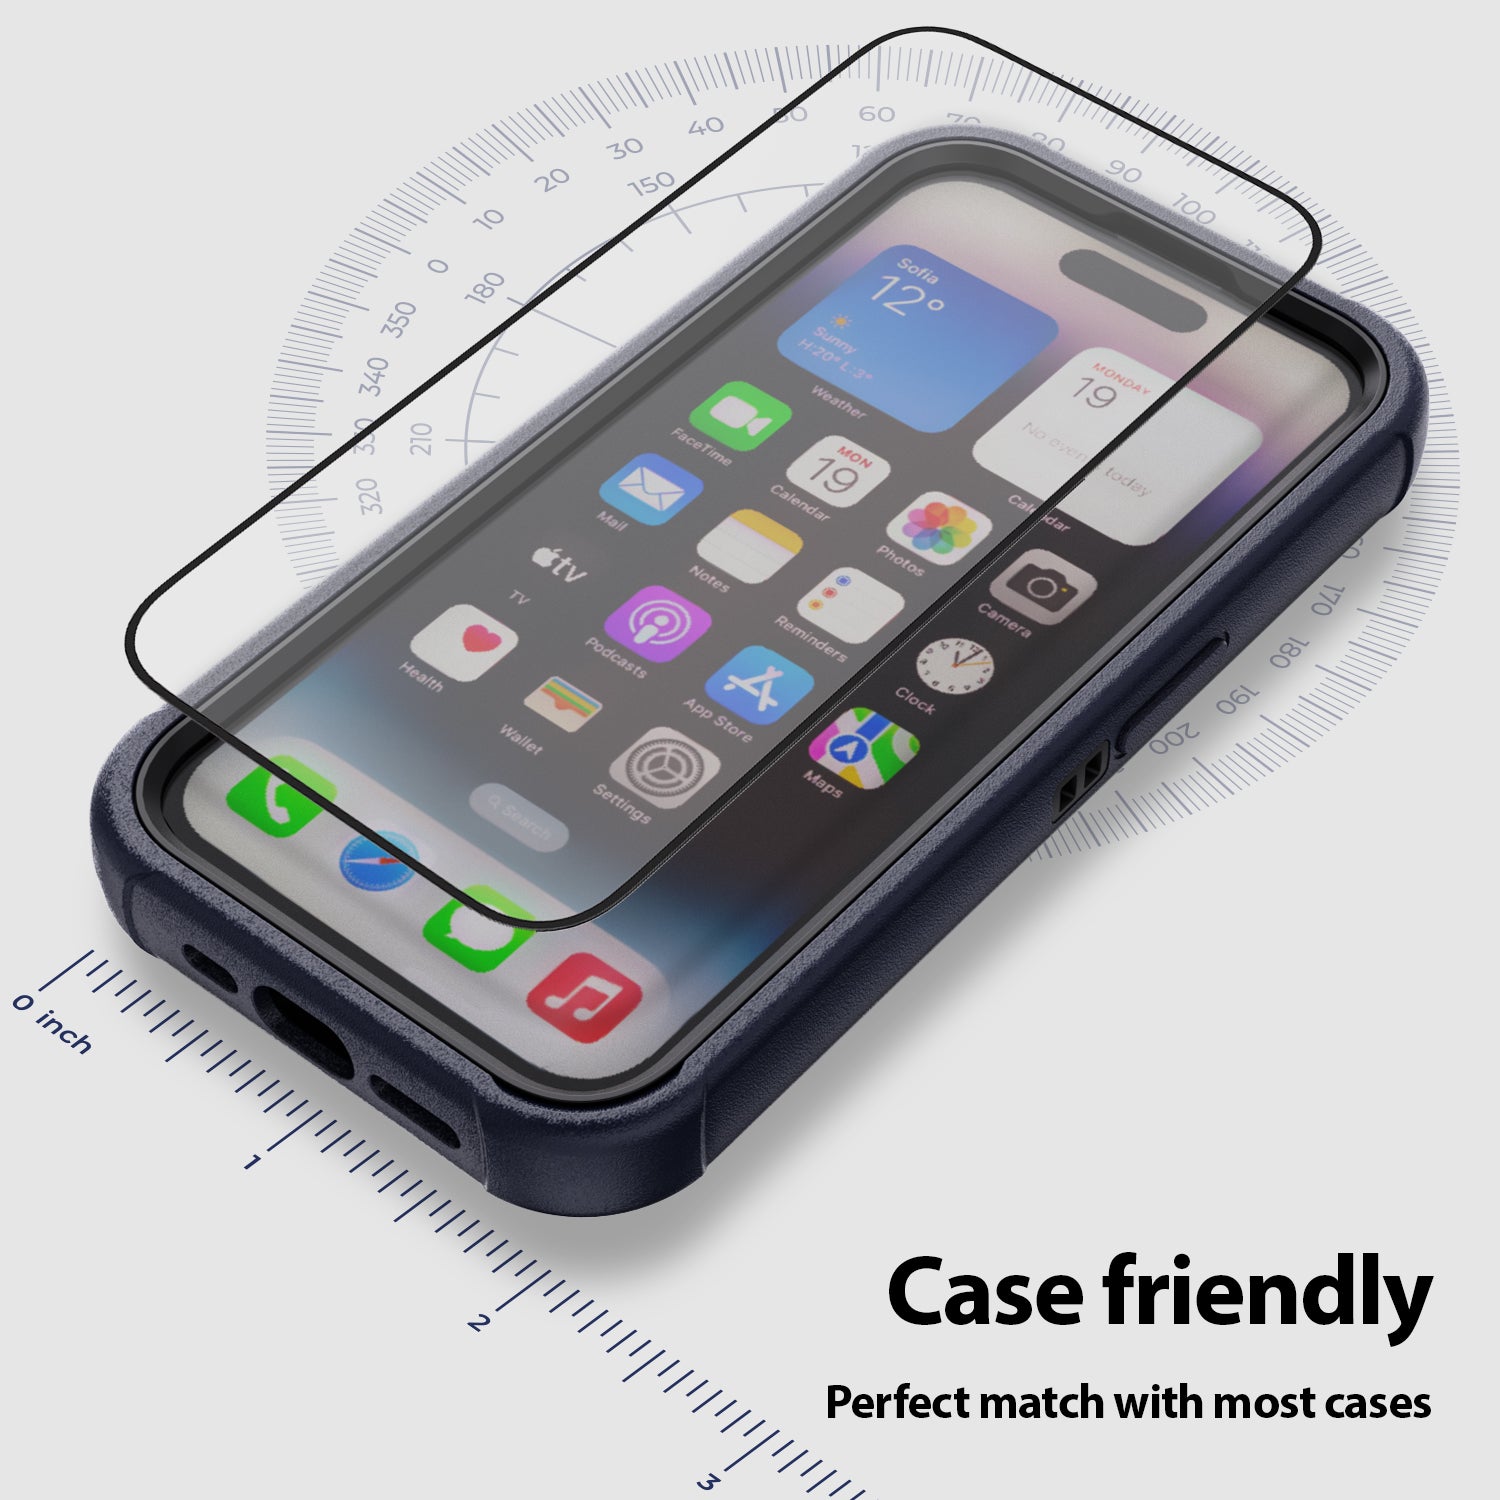 iPhone 13 Pro Max Dome Glass Tempered Glass Screen Protector (6.7) –  Whitestonedome